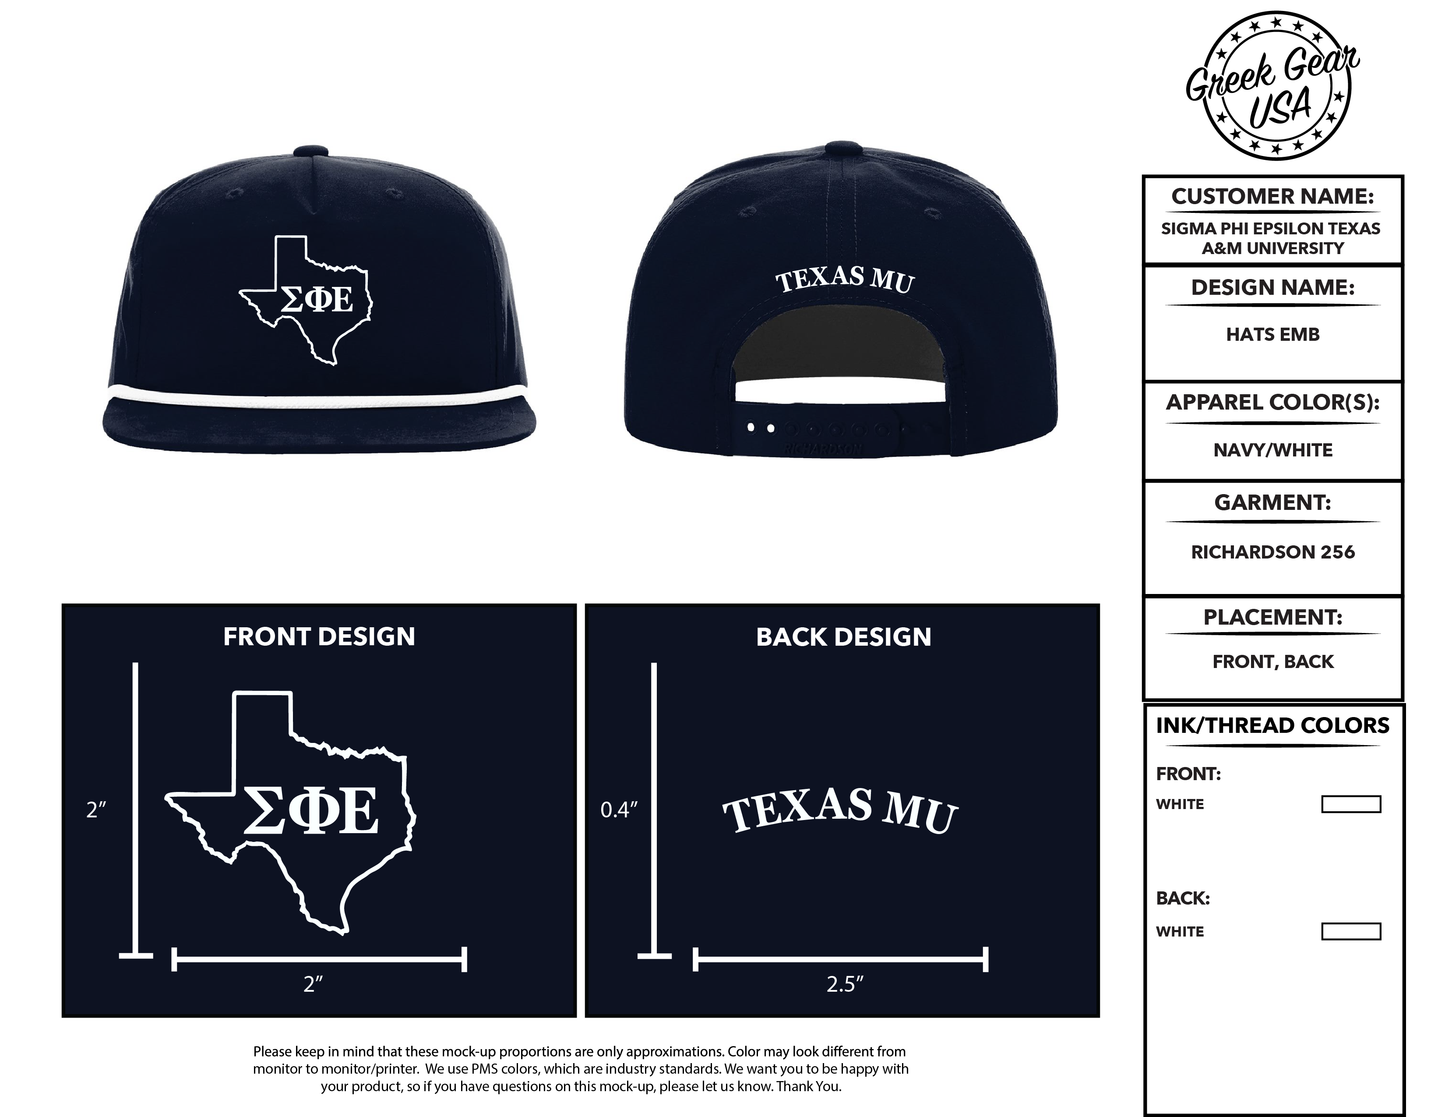 Sigma Phi Epsilon Texas A&M University Rope Hats